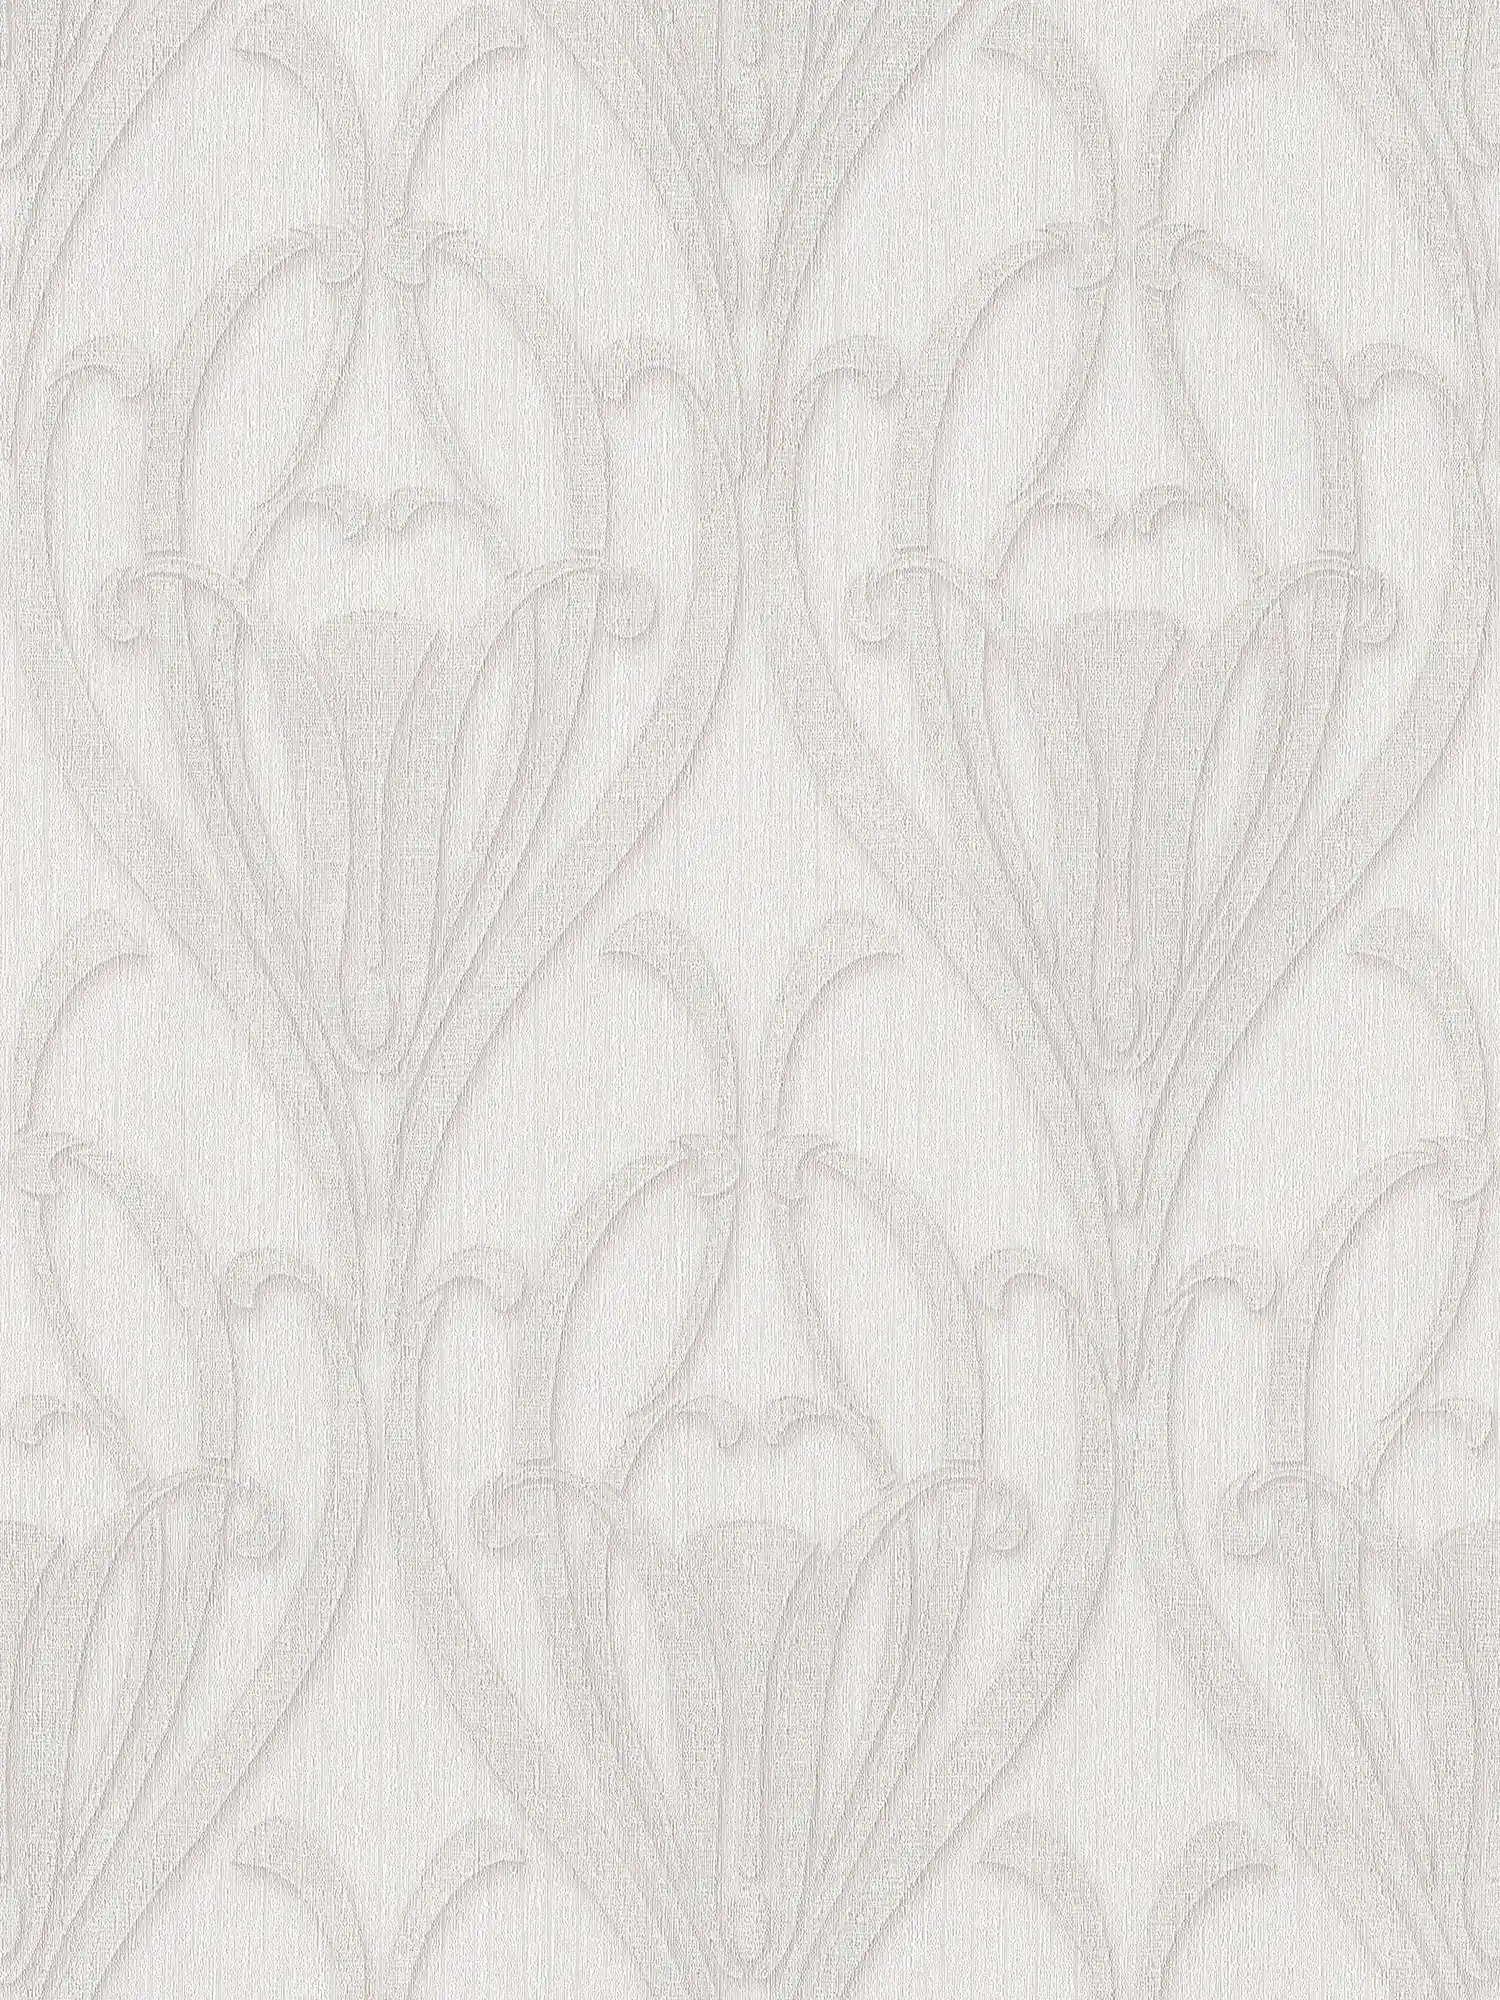 Art Deco Tapete mit Ornament Muster & Textiloptik
